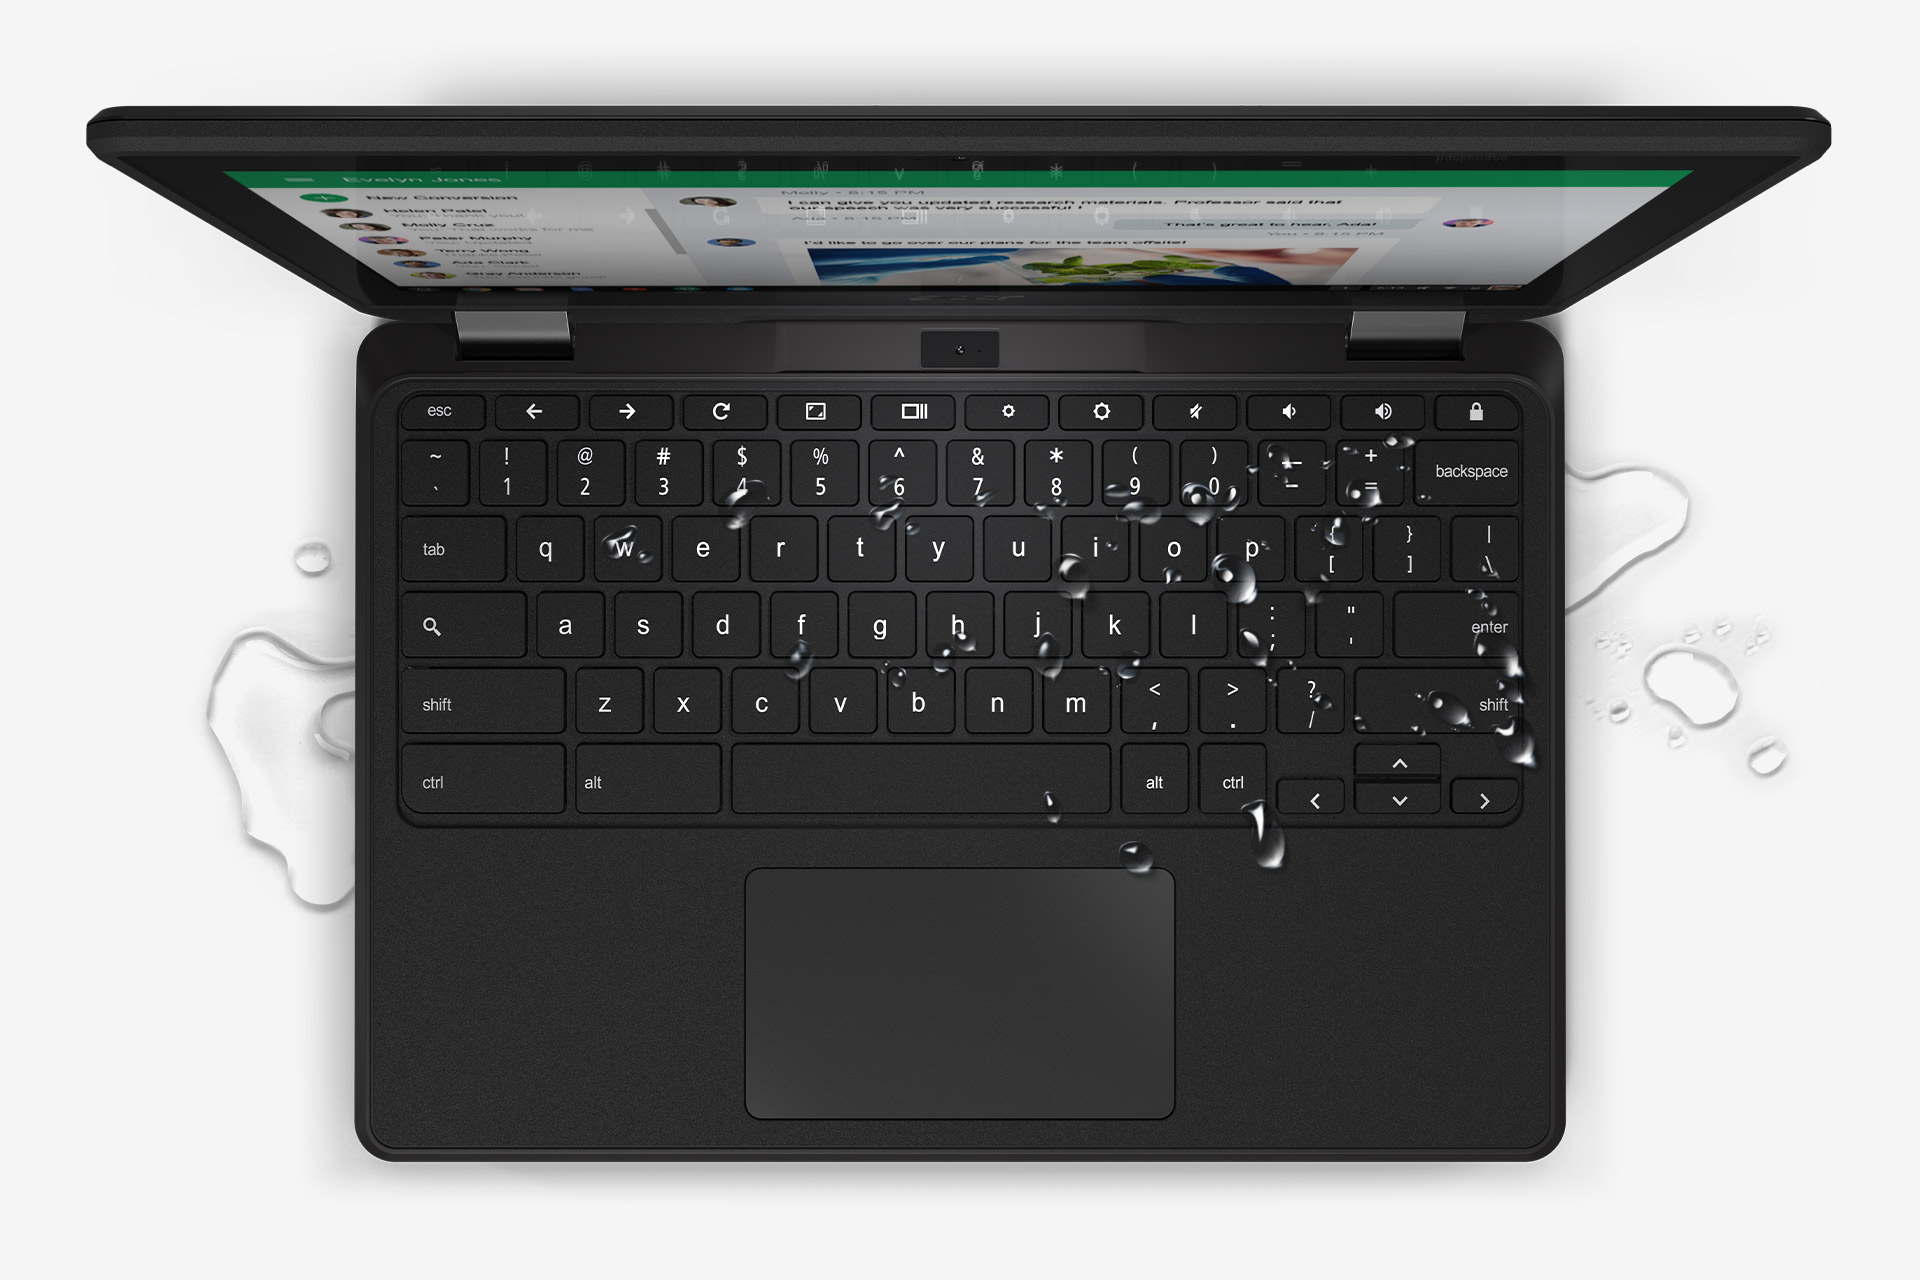 Image of Acer Chromebook showing spill resistance